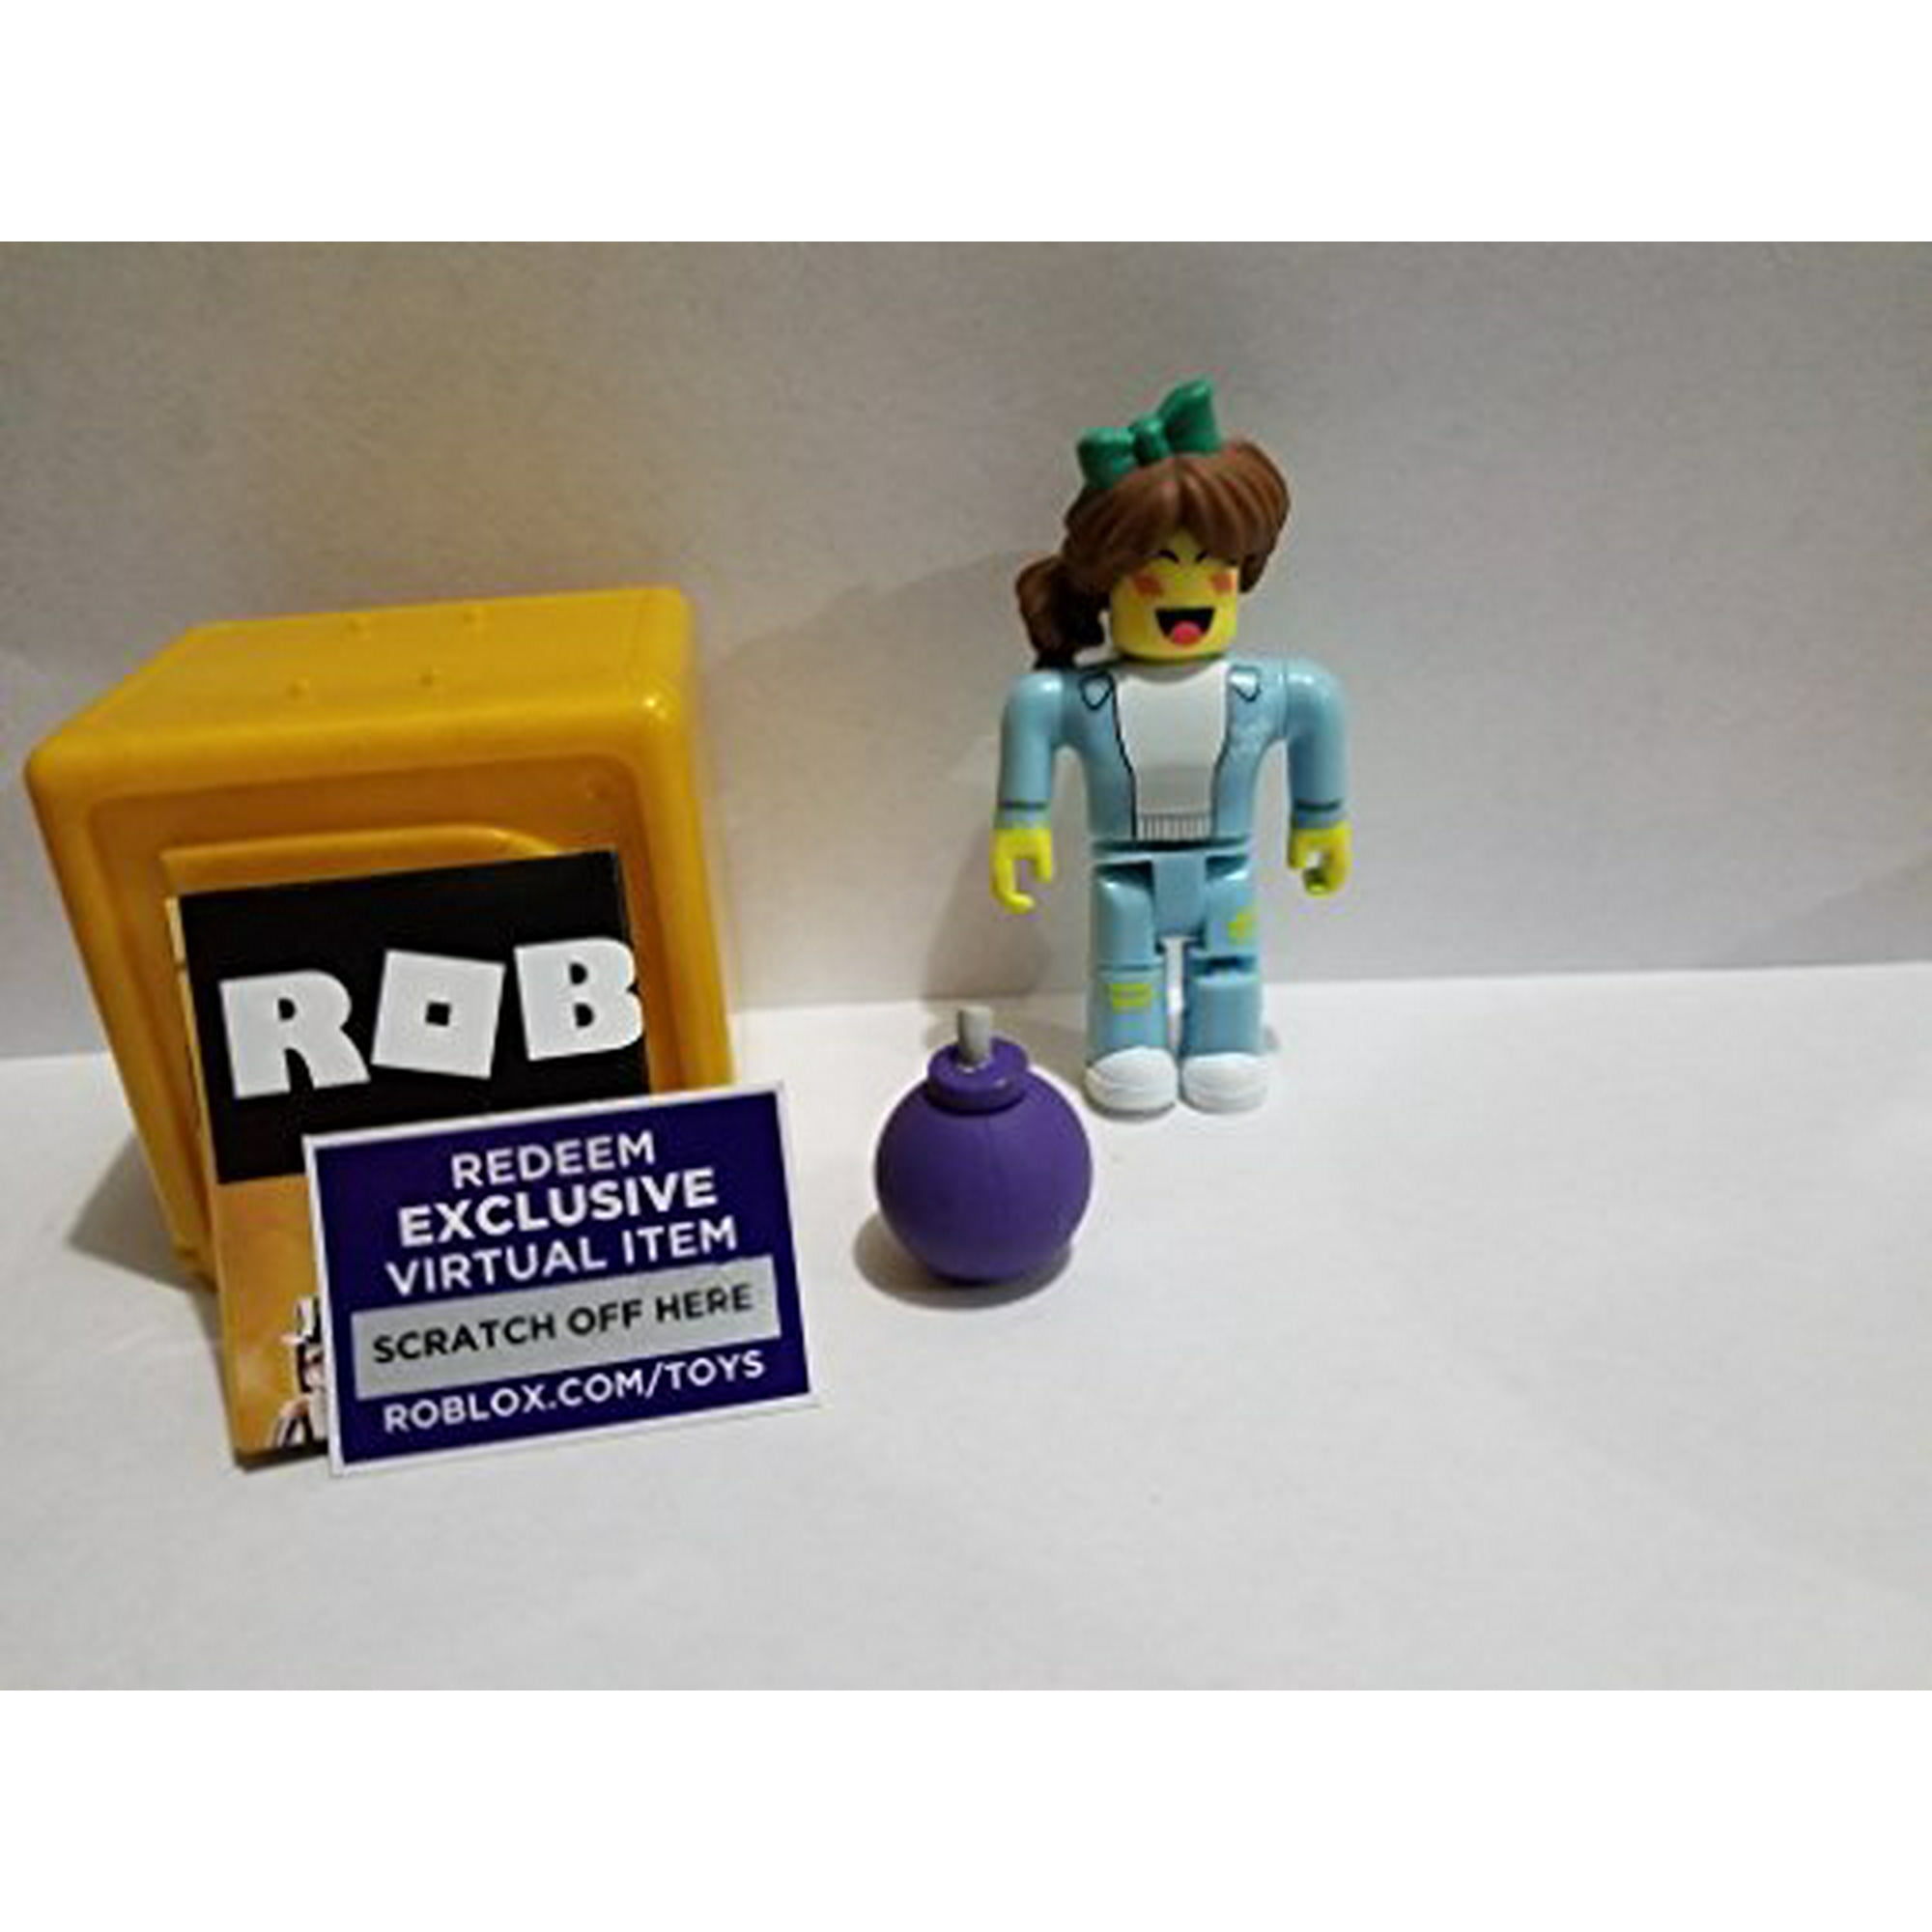 Roblox Gold Celebrity Series Super Bomb Survival Shopgirl Action Figure Mystery Box Virtual Item Code 2 5 Walmart Canada - roblox toys redeem checklist